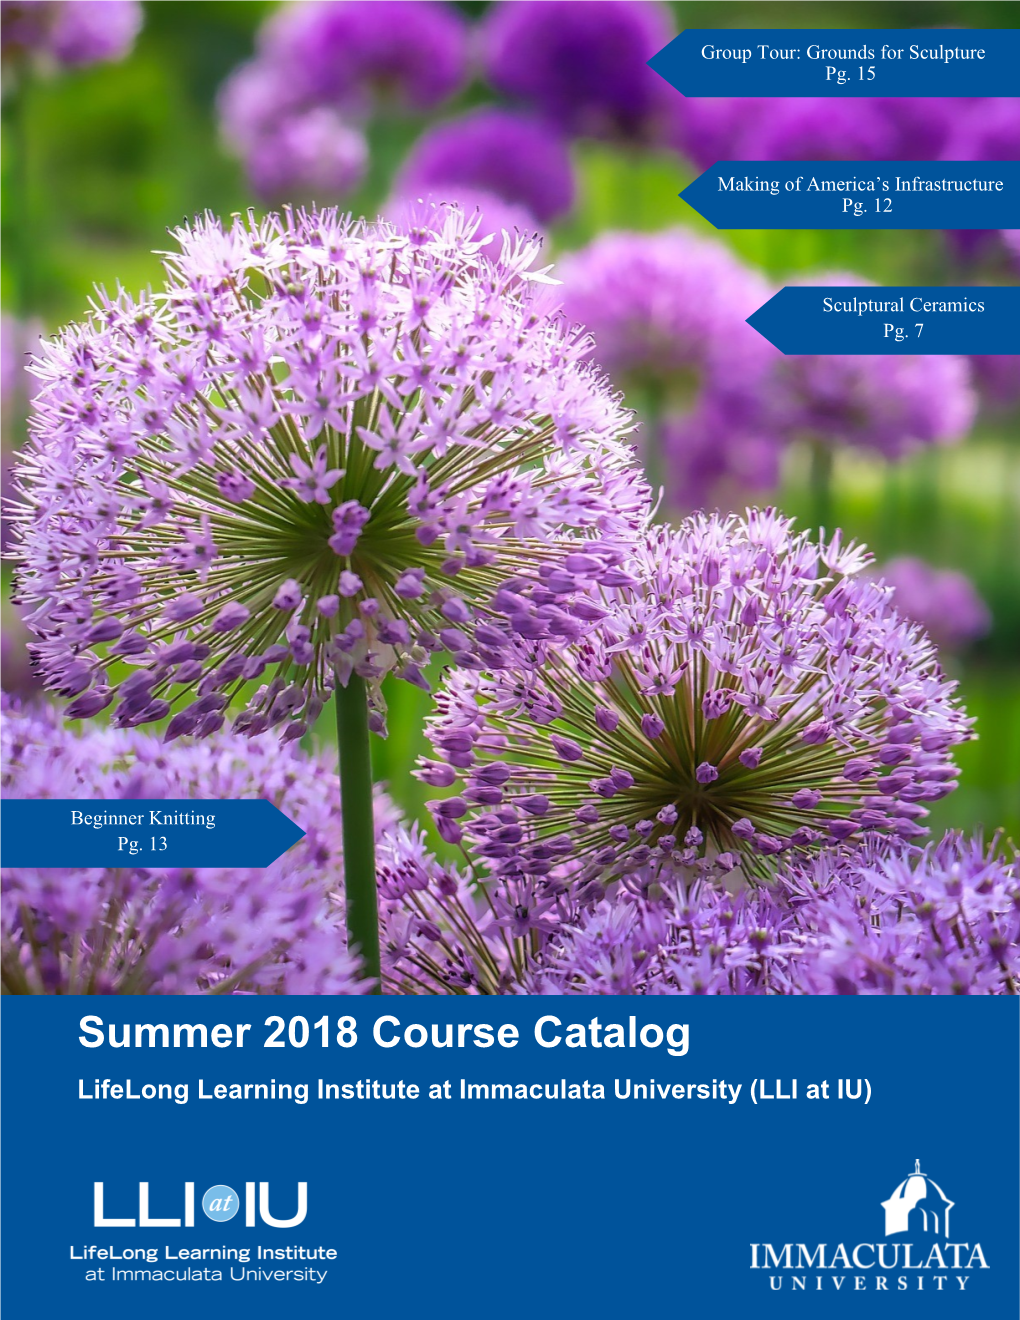 Summer 2018 Course Catalog Lifelong Learning Institute at Immaculata University (LLI at IU) Lifelong Learning Institute at Immaculata University